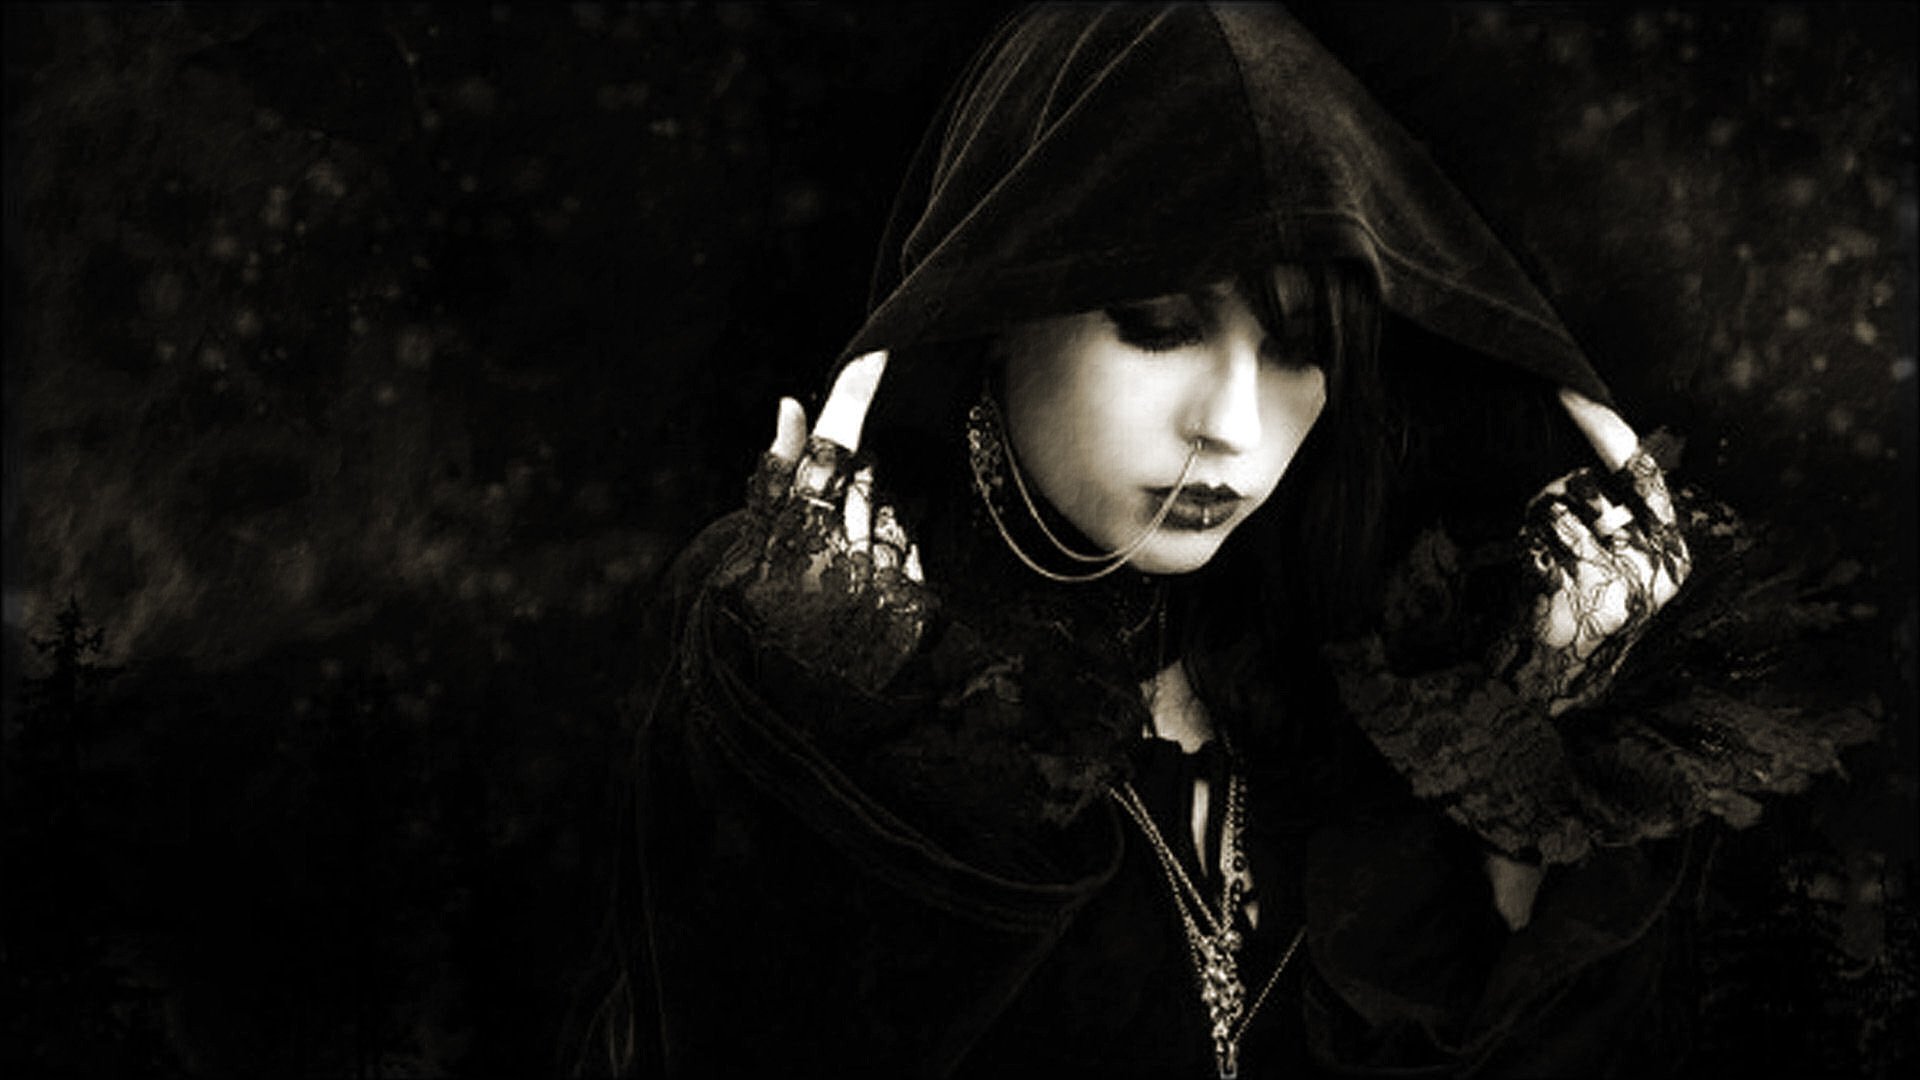 GOTHIC goth style goth loli women girl dark fantasy witch f wallpaper